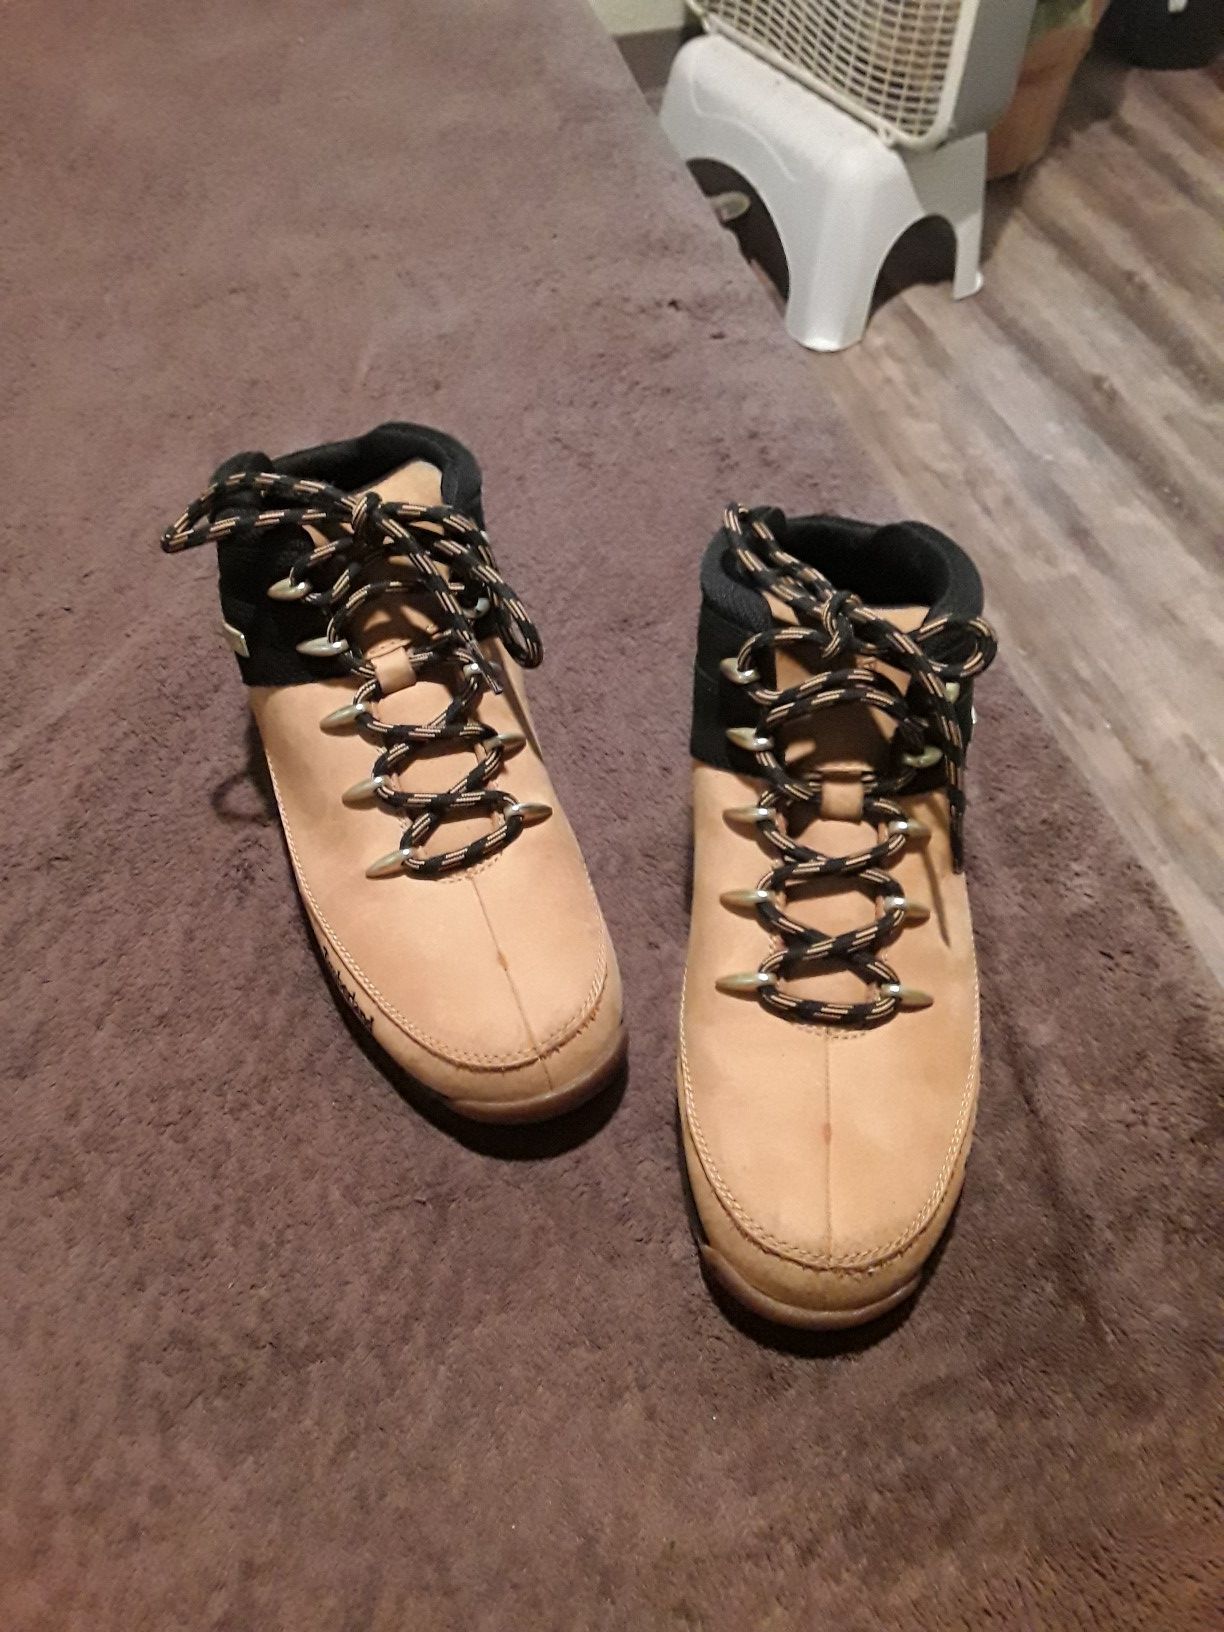 Men's Timberland Boots